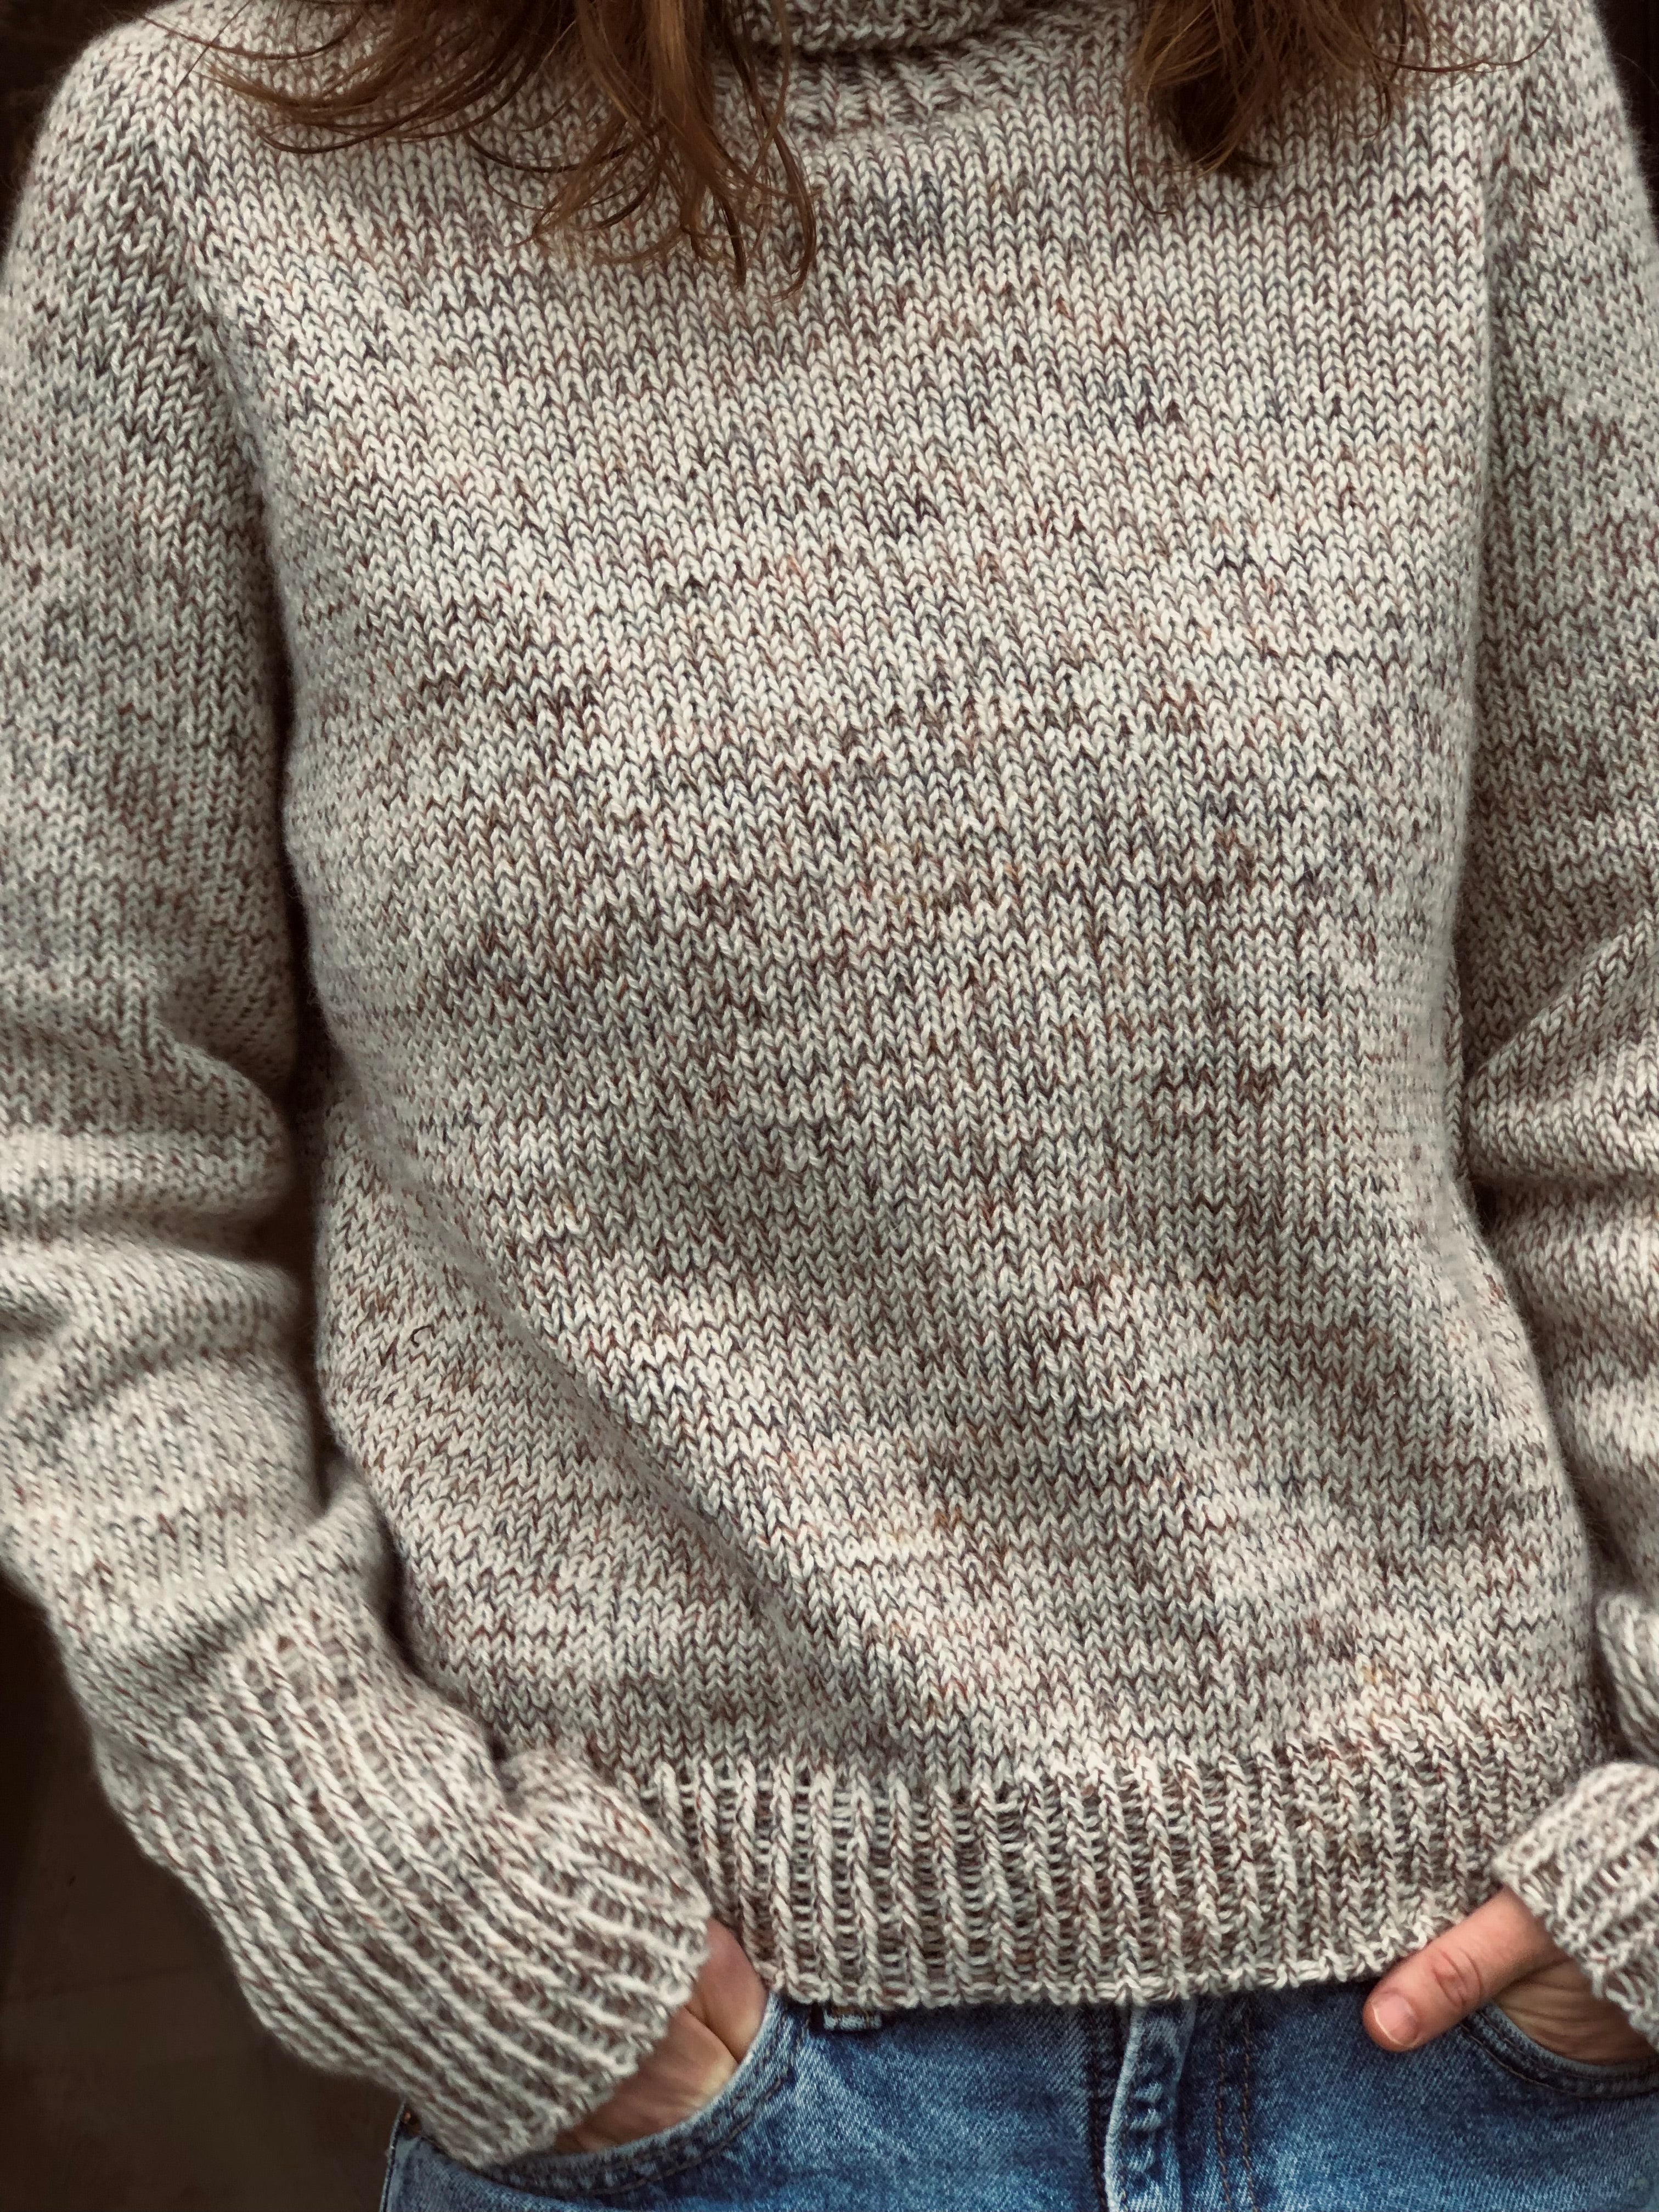 Modell: Terrazzo Sweater fra Petite Knit, strikket i Eco Cashmere fra Lana Gatto og Miss SKinny fra @kine_sine. Foto: Kine Nordahl Kleiven